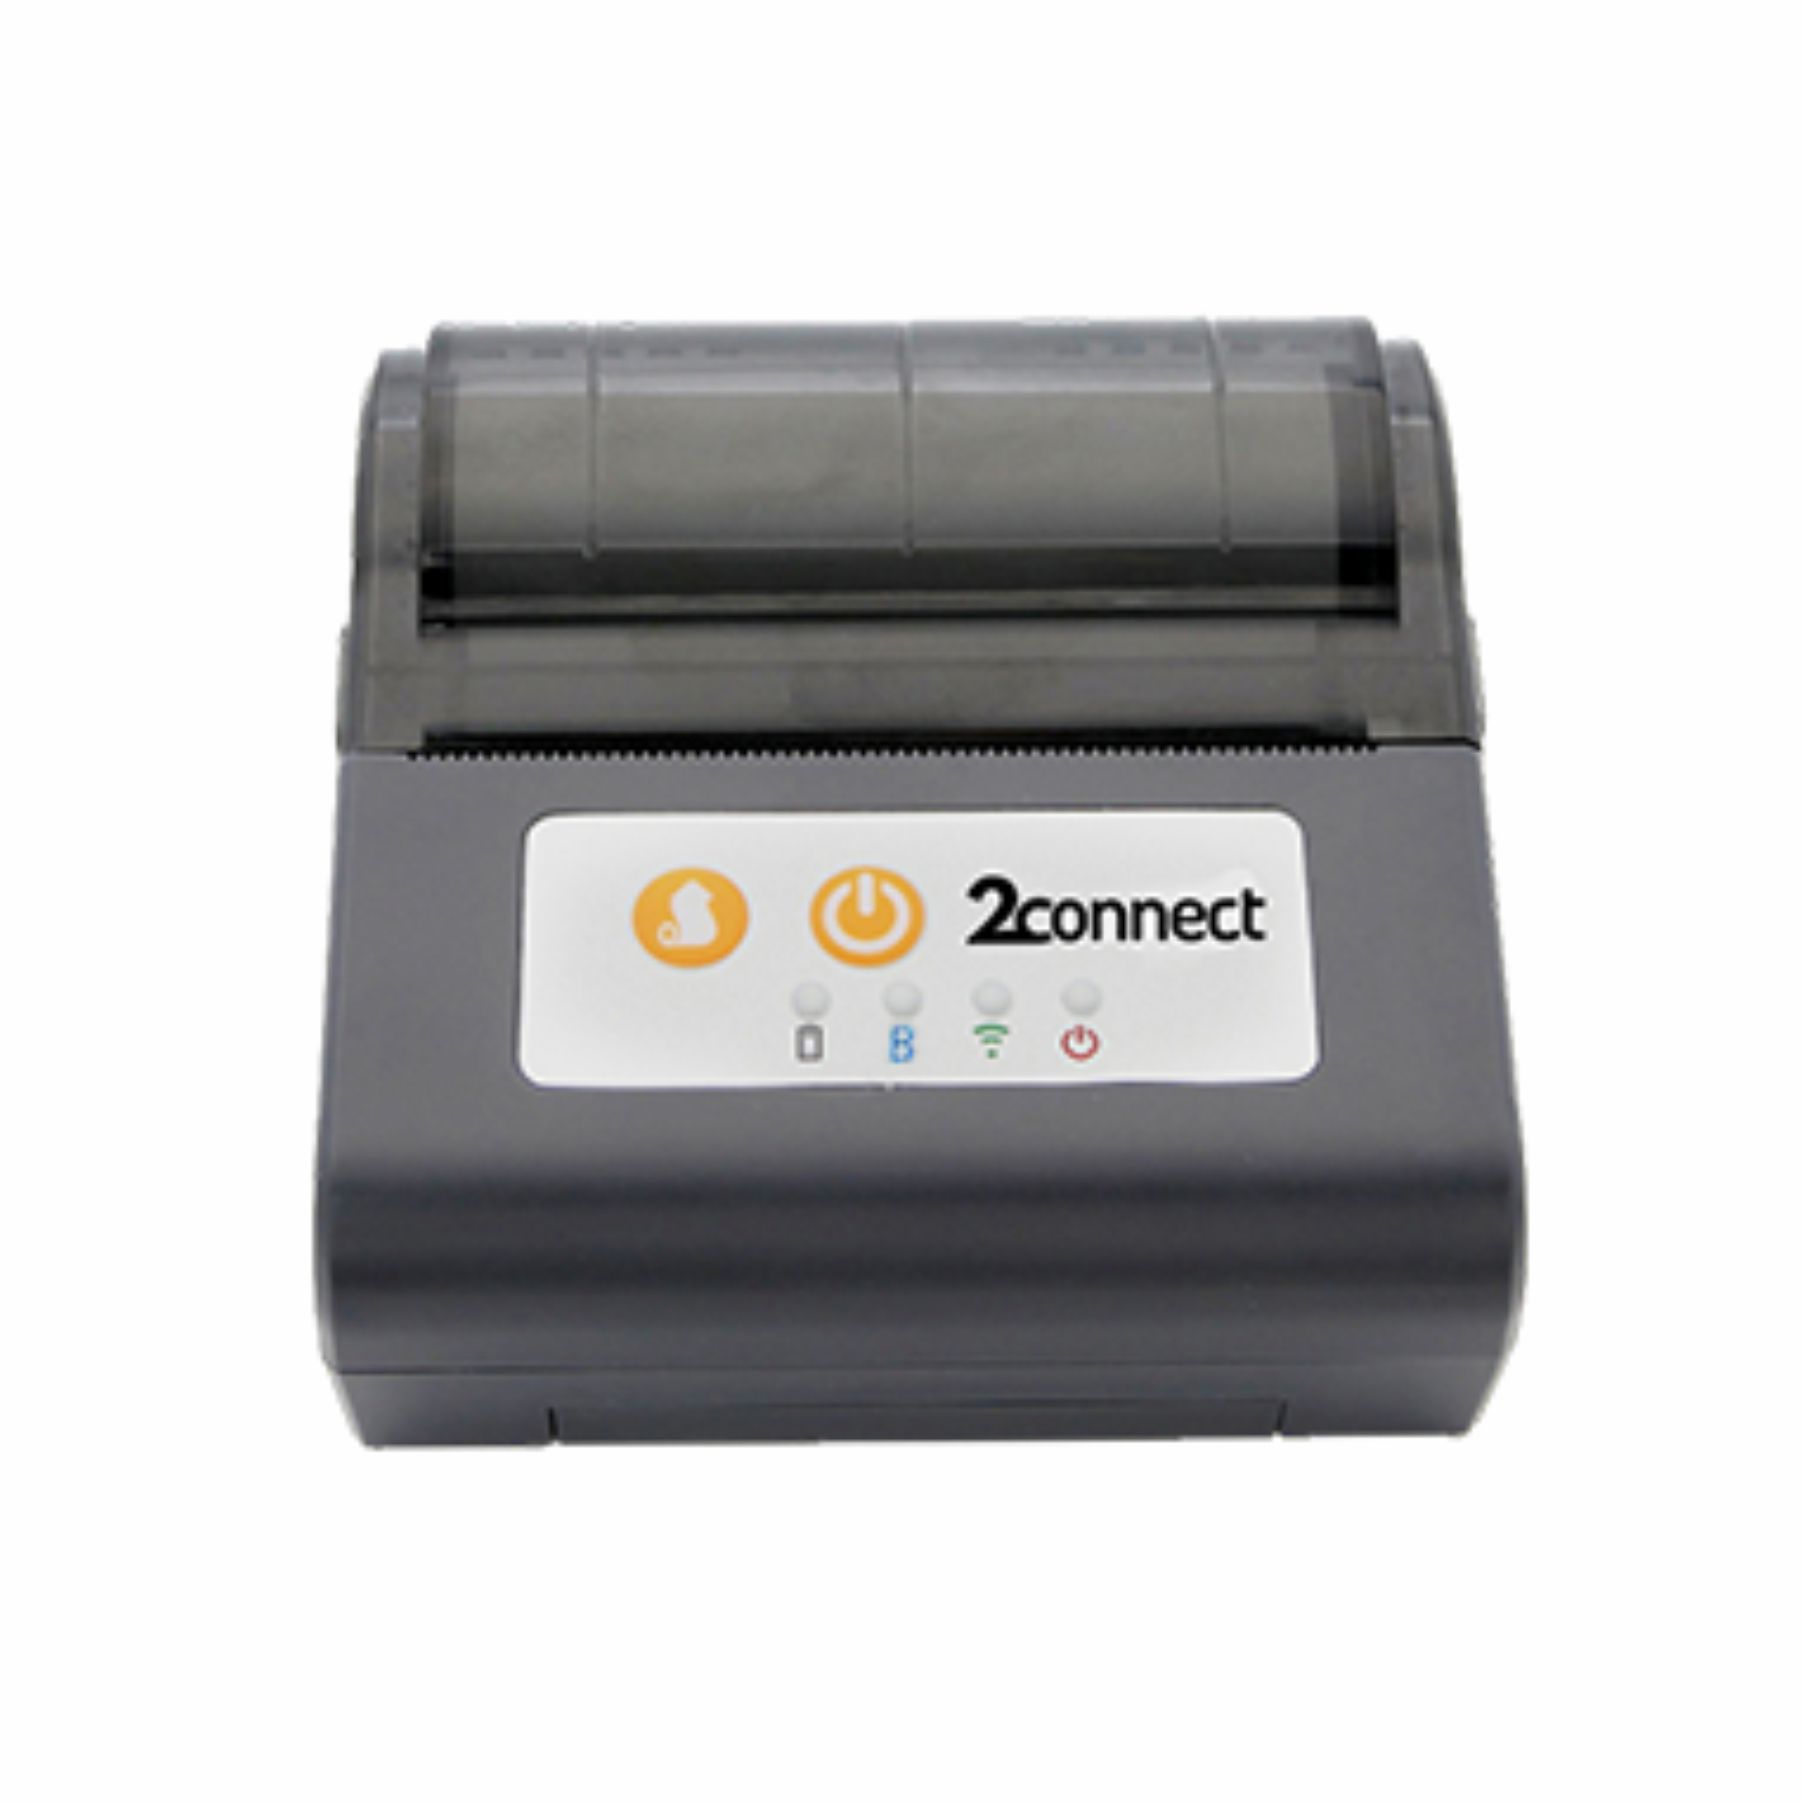 Impresora 2CONNECT PRINTER 58MM TERMICO Bluetooth Punto de Venta